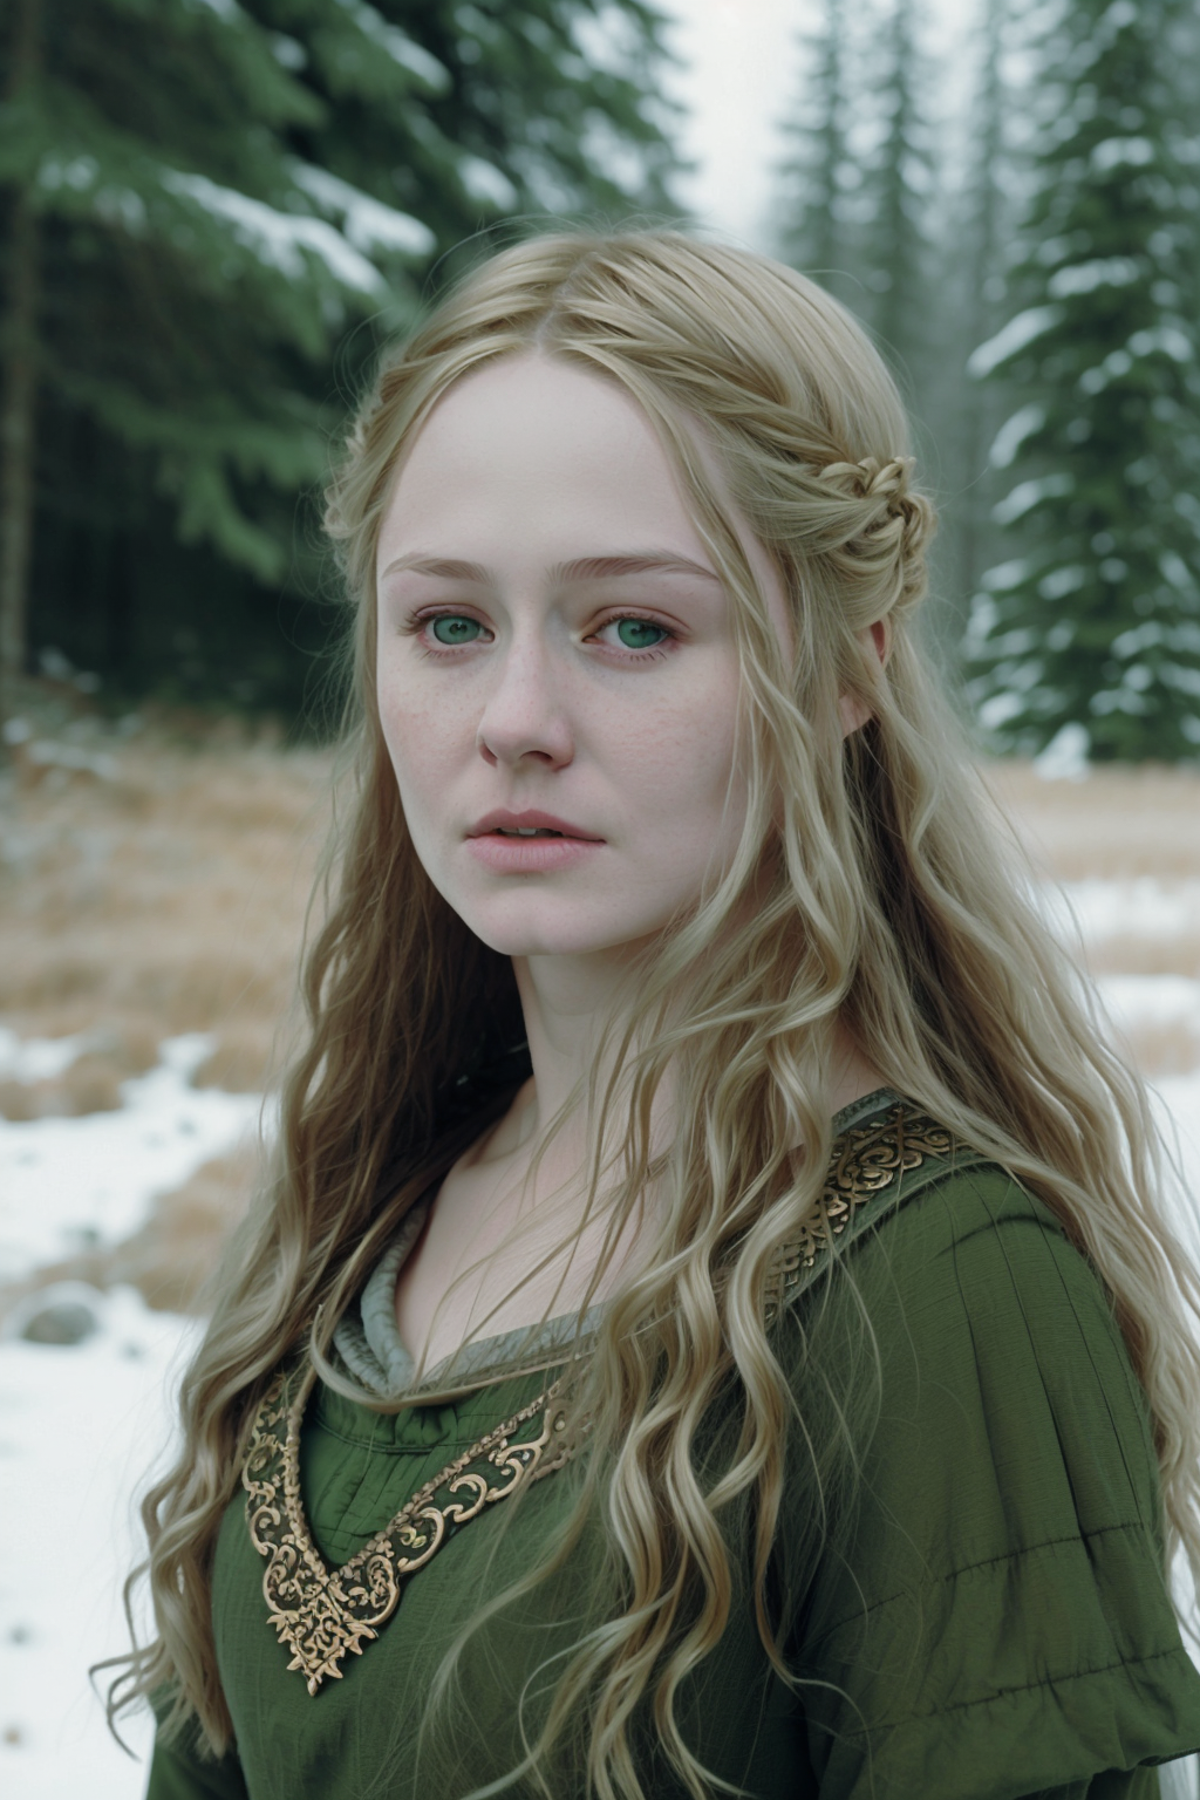 Eowyn - Miranda Otto - Lord of the Rings image by Konan